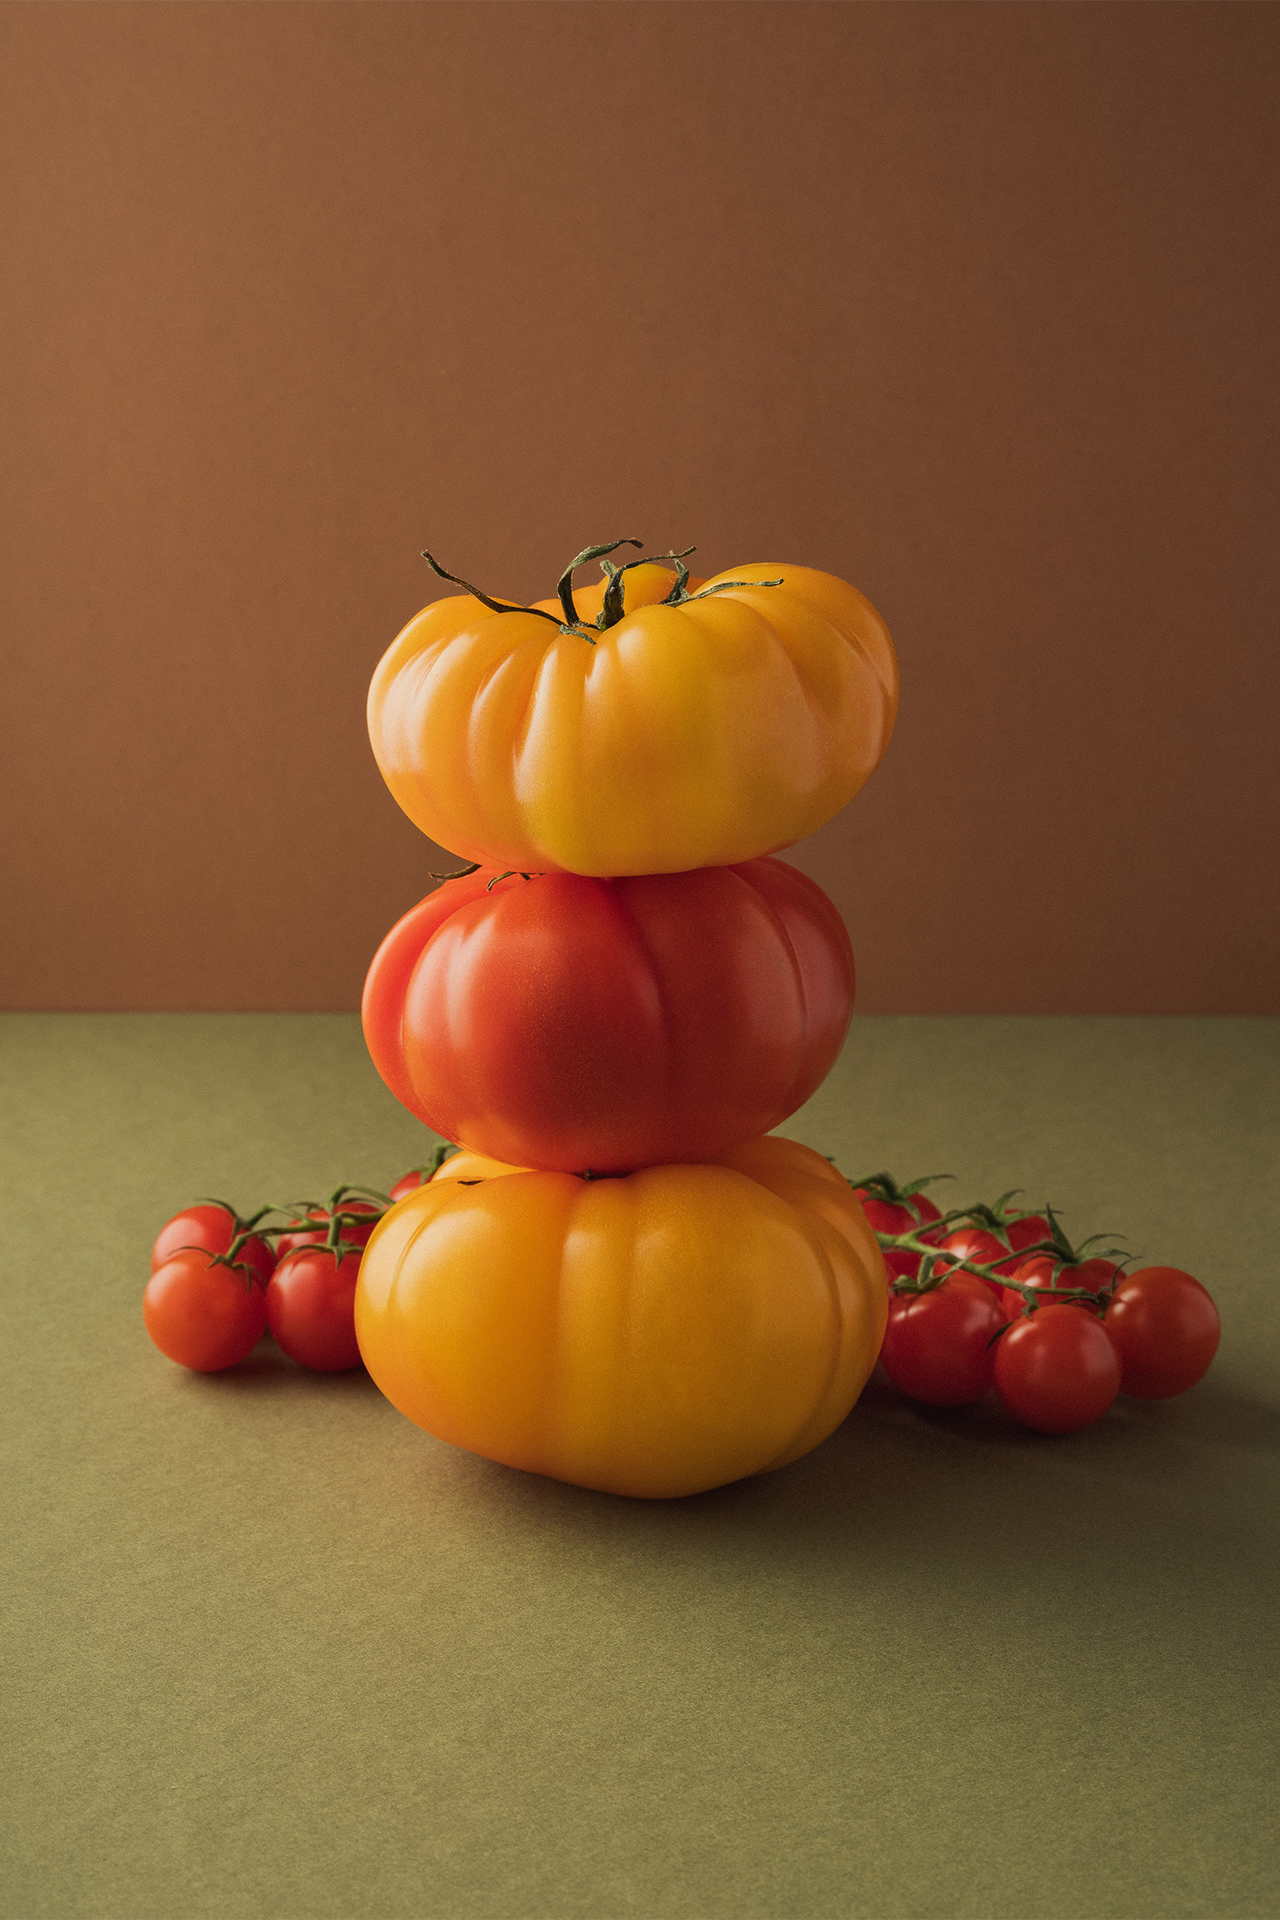 Polène-tomate ambiance 1-primeur-agence s